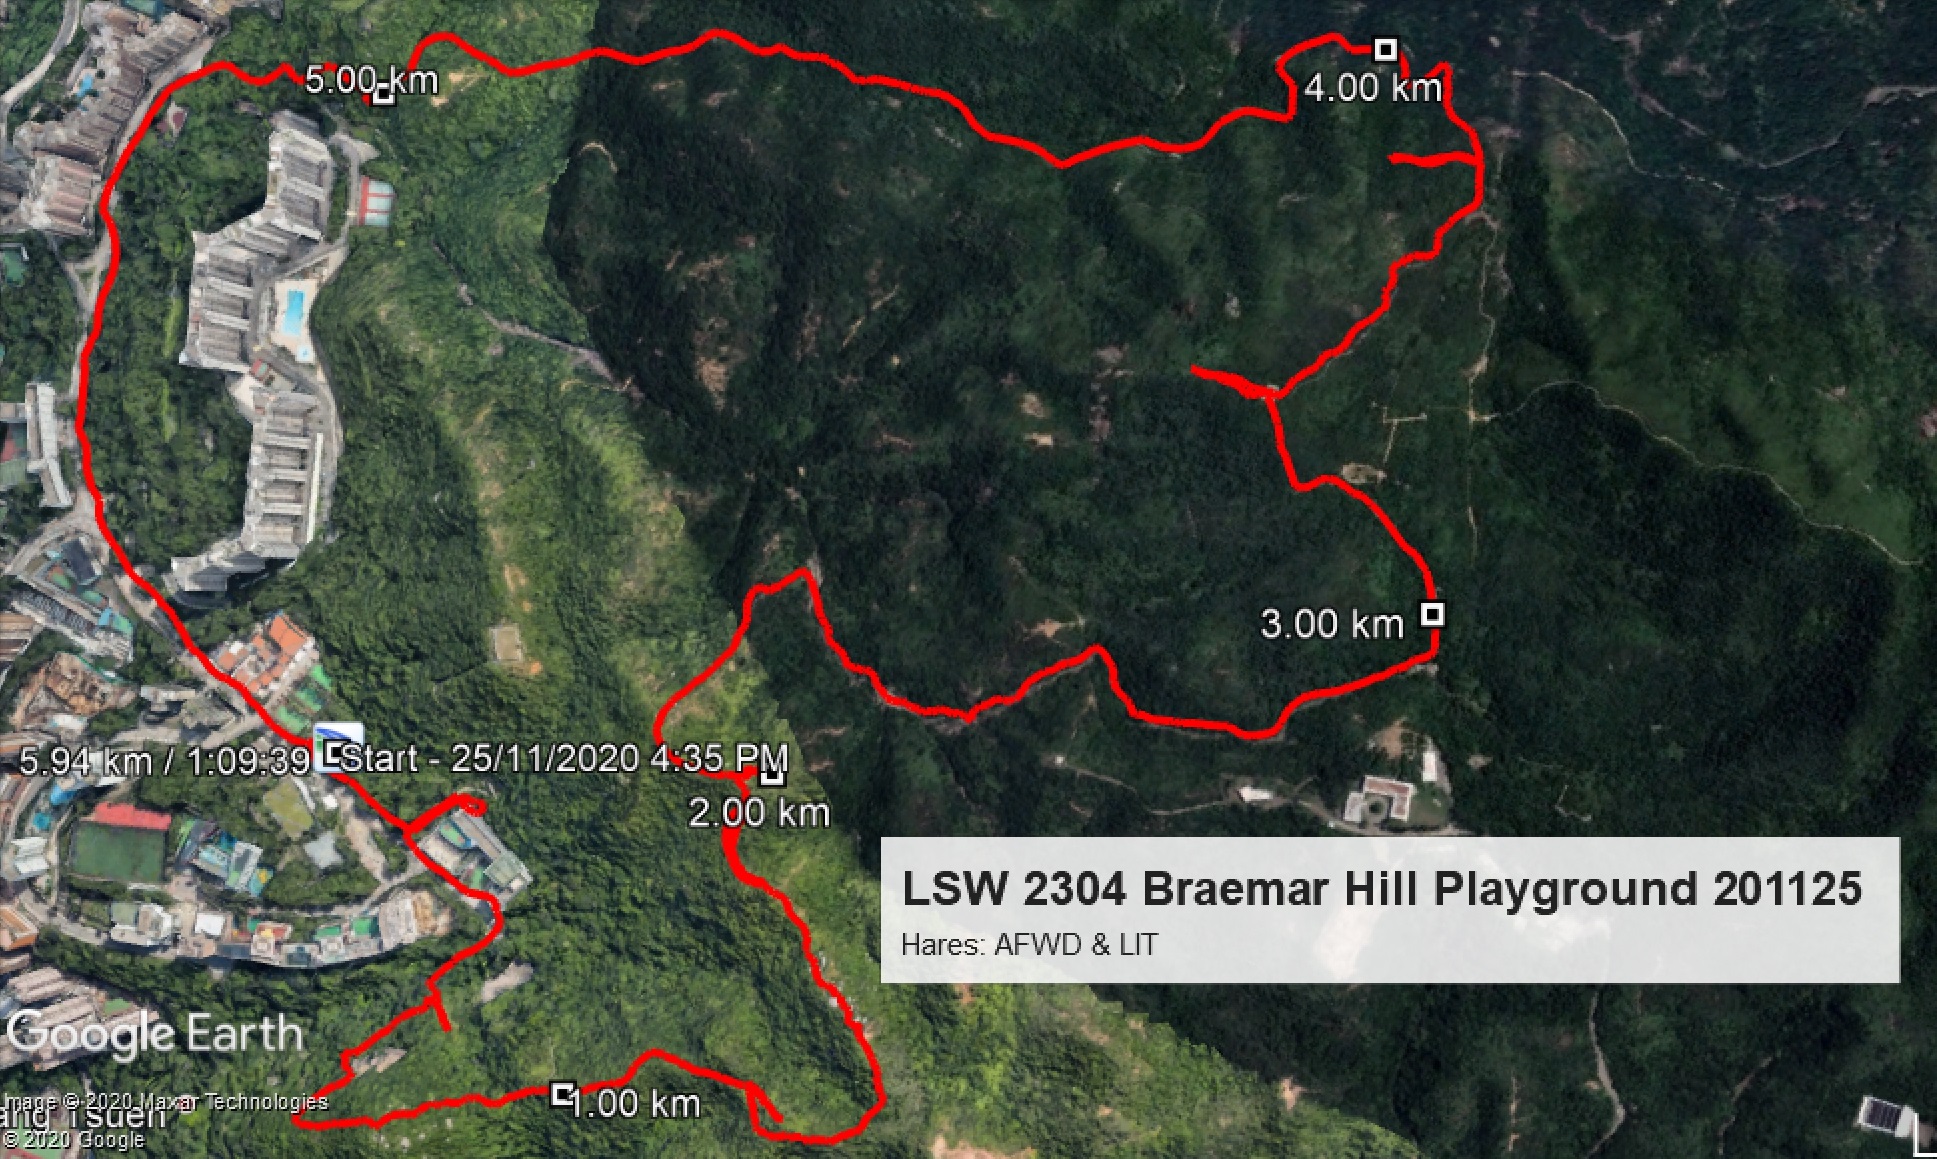 Braemar Hill Playground 201125 5.94km 69mins